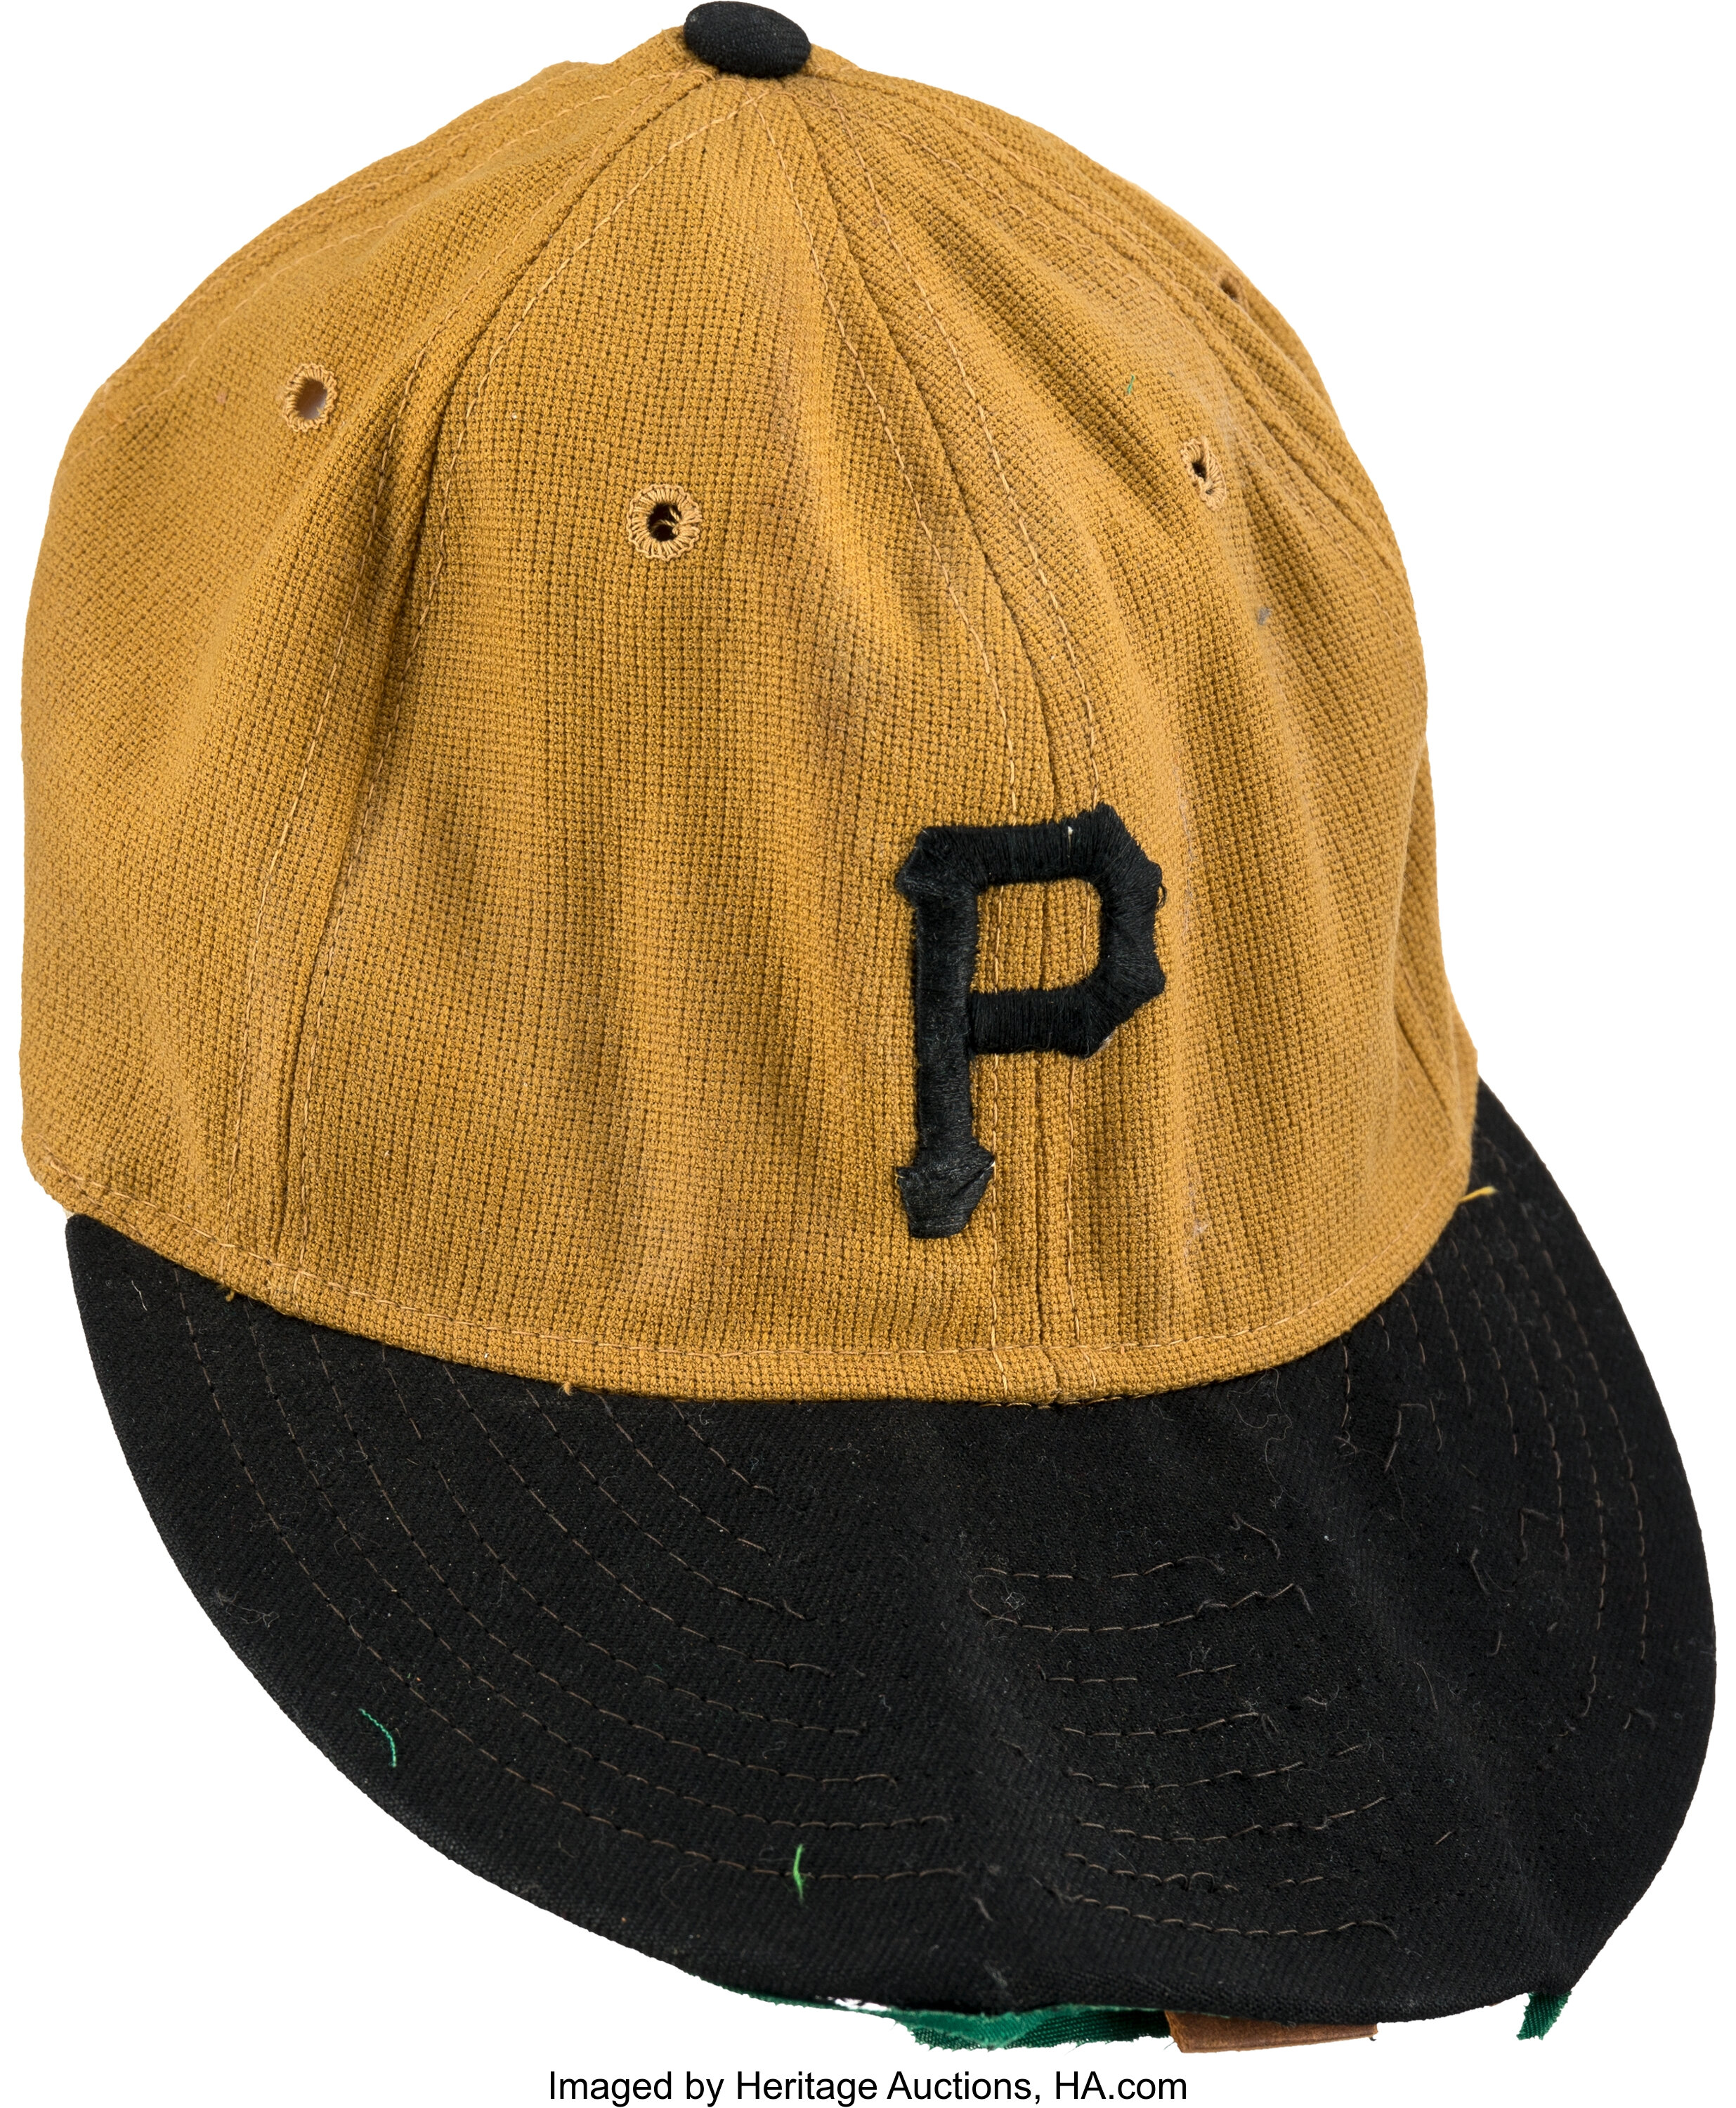 1971 pittsburgh pirates hat